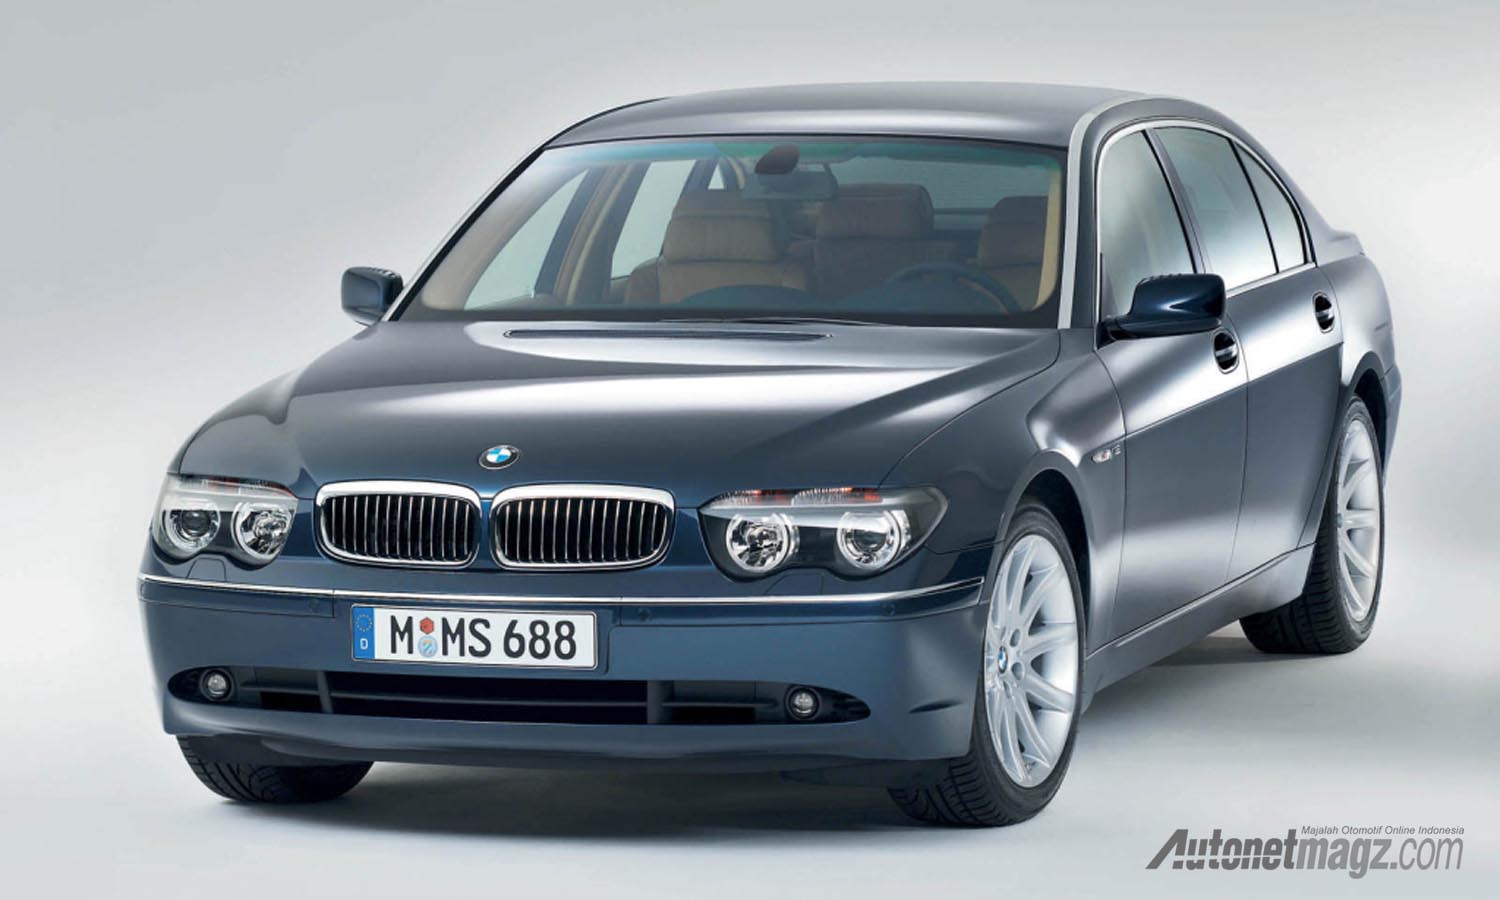 Berita, bmw seri 7 amerika recall pintu: BMW Recall 45.484 Unit BMW Seri 7 Terkait Masalah Pintu